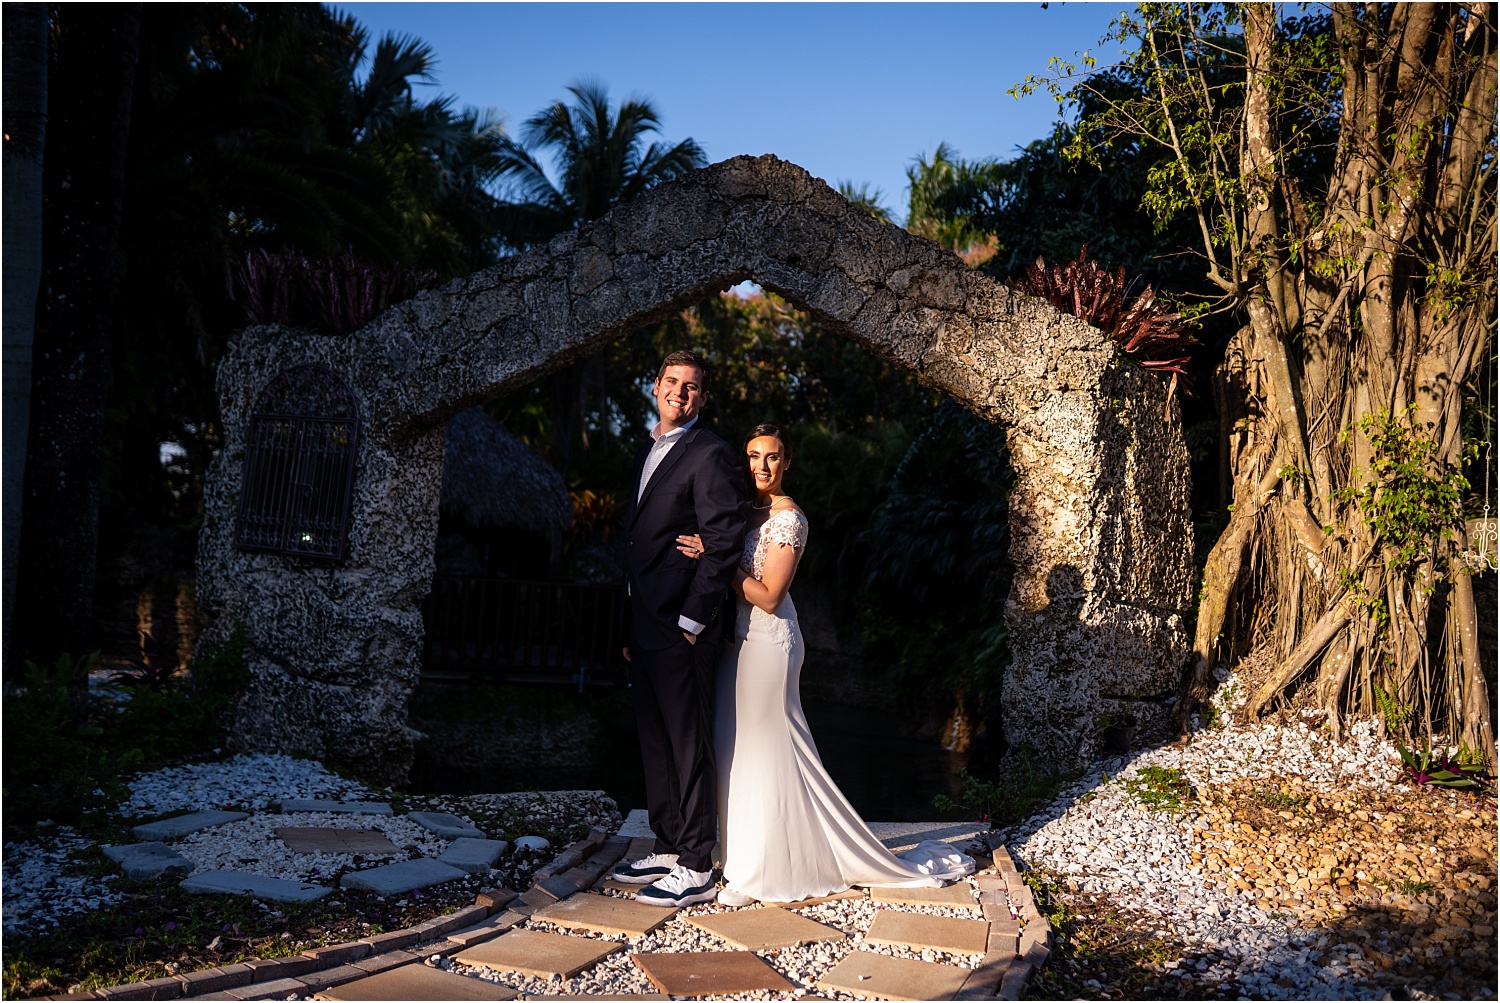 Secret Gardens Miami Wedding organic moments photography